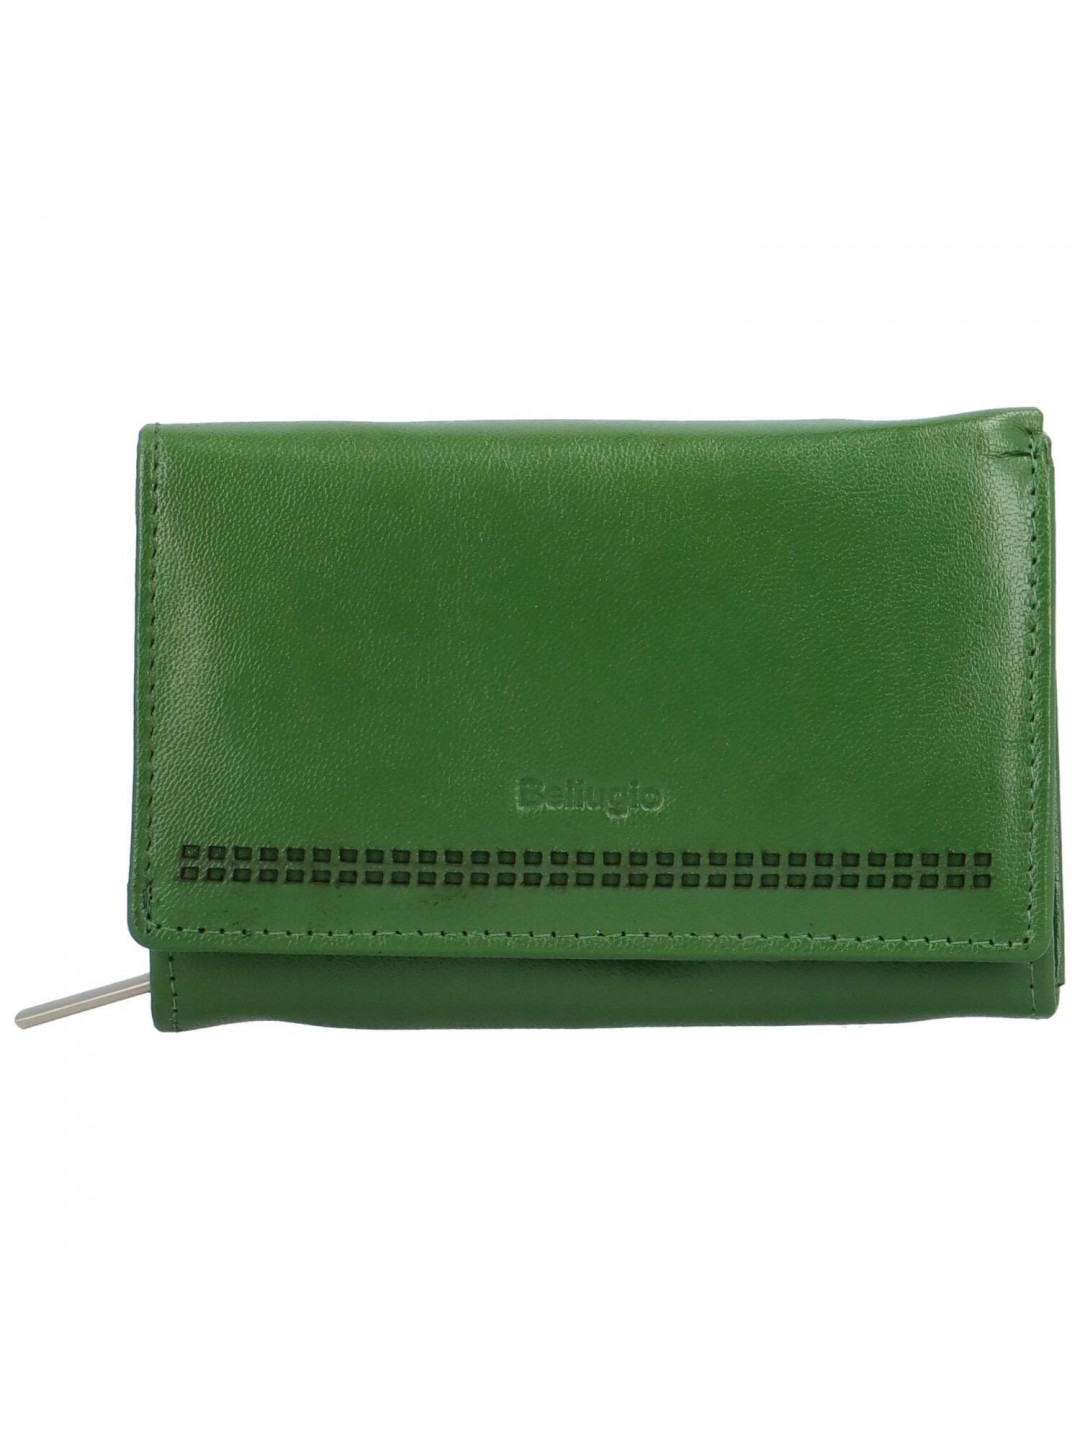 Dámská kožená peněženka zelená – Bellugio Chiarana